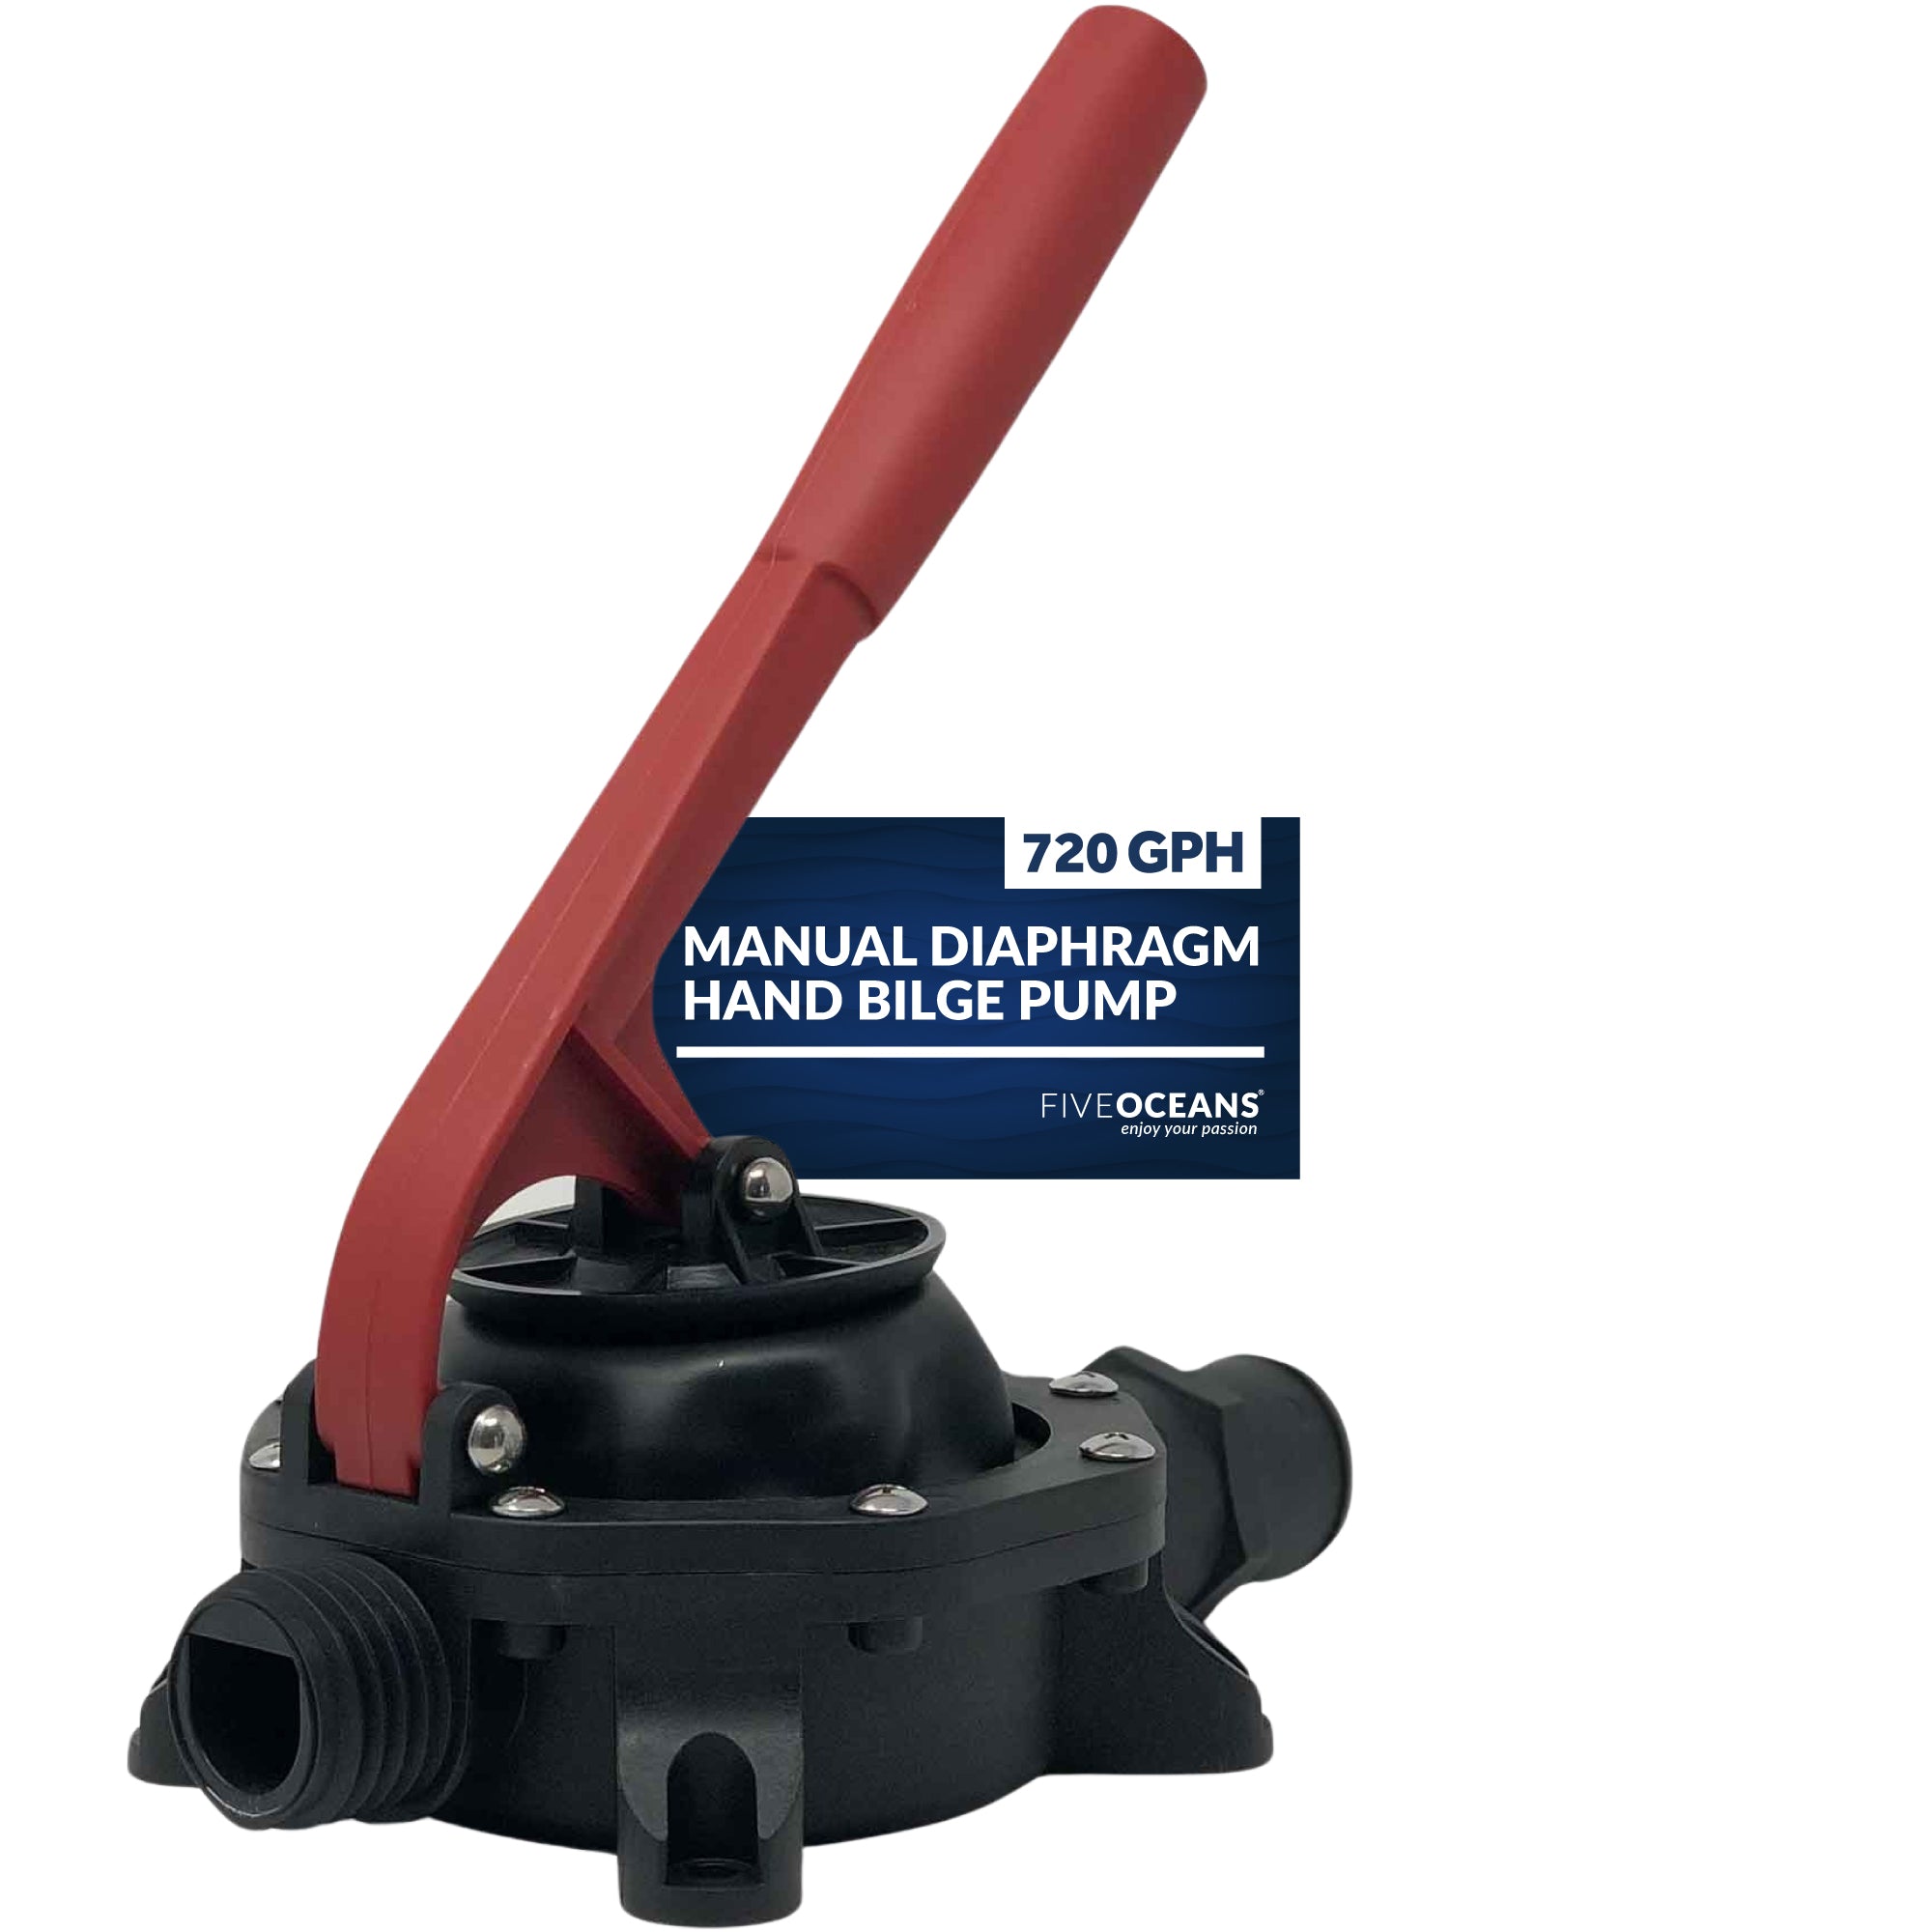 Manual Diaphragm Hand Bilge Pump 720 GPH - FO4328